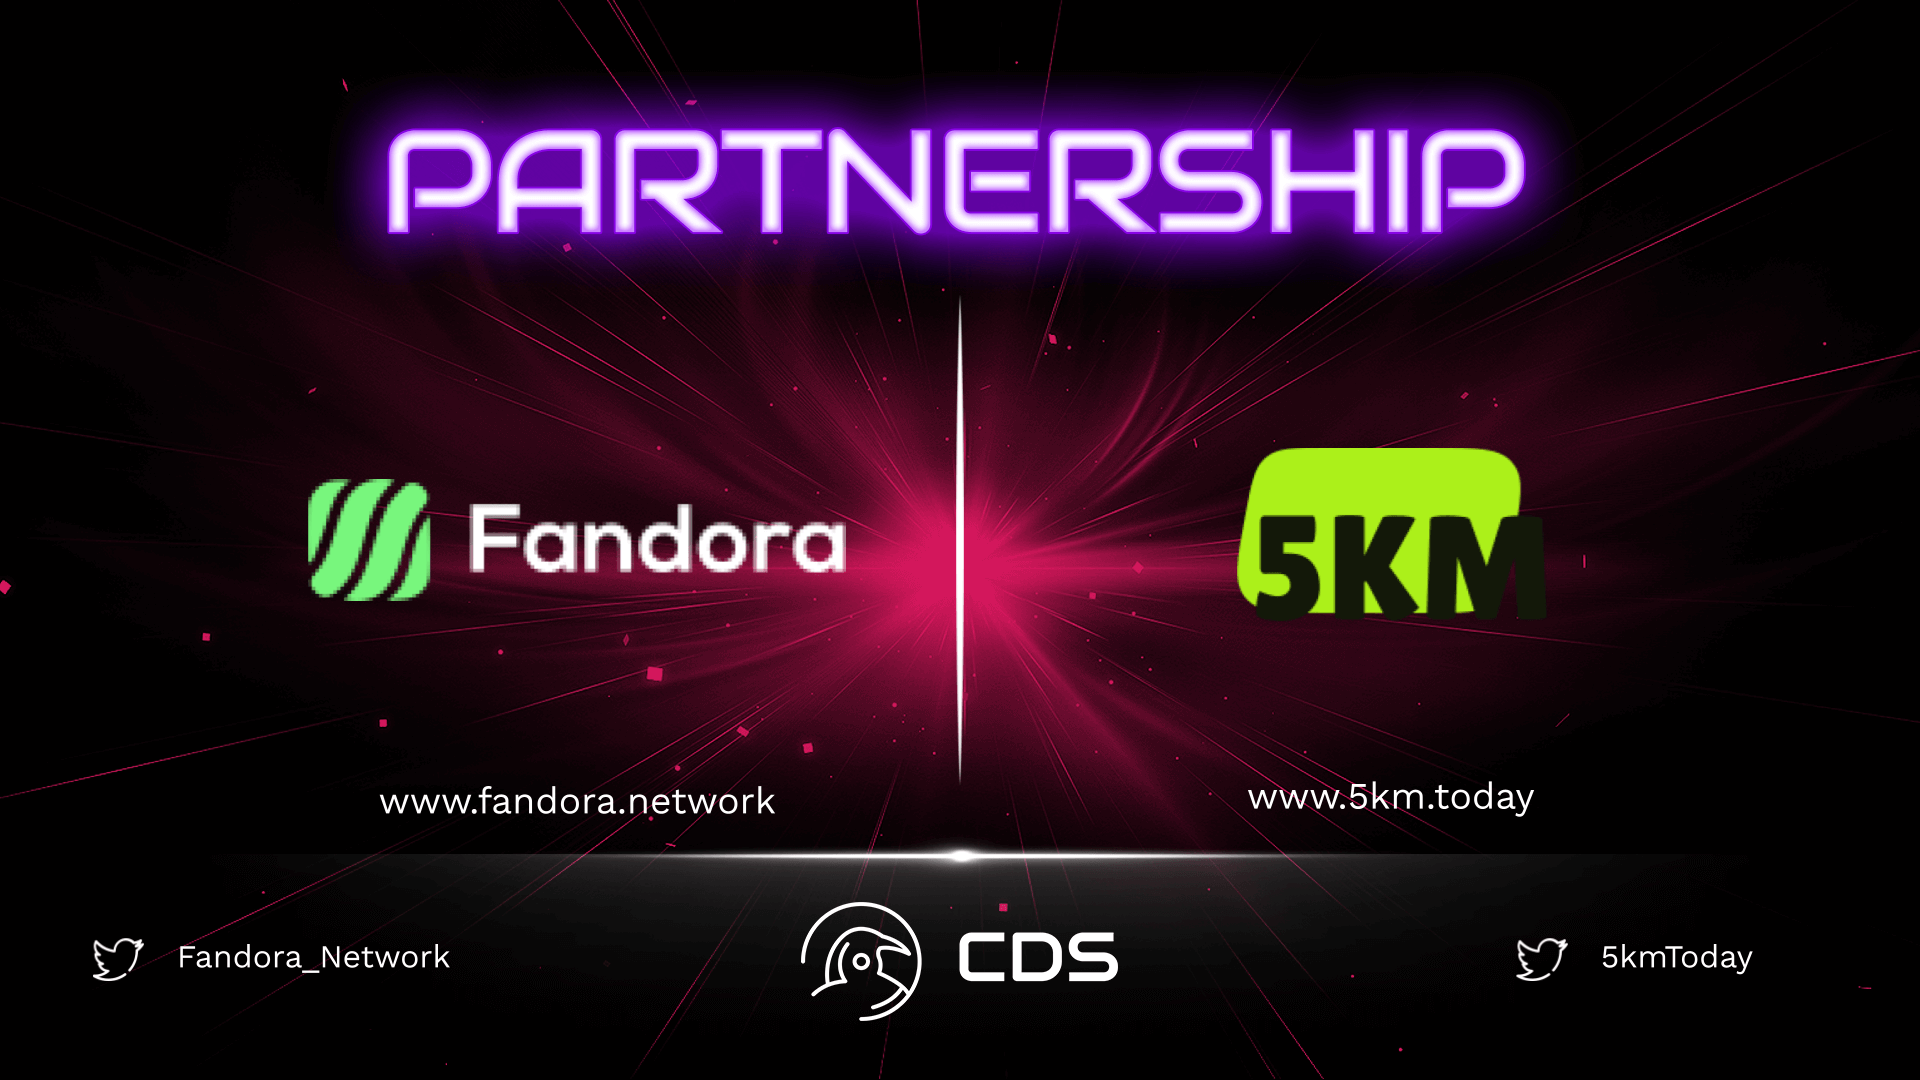 fandora partnersip with 5KM